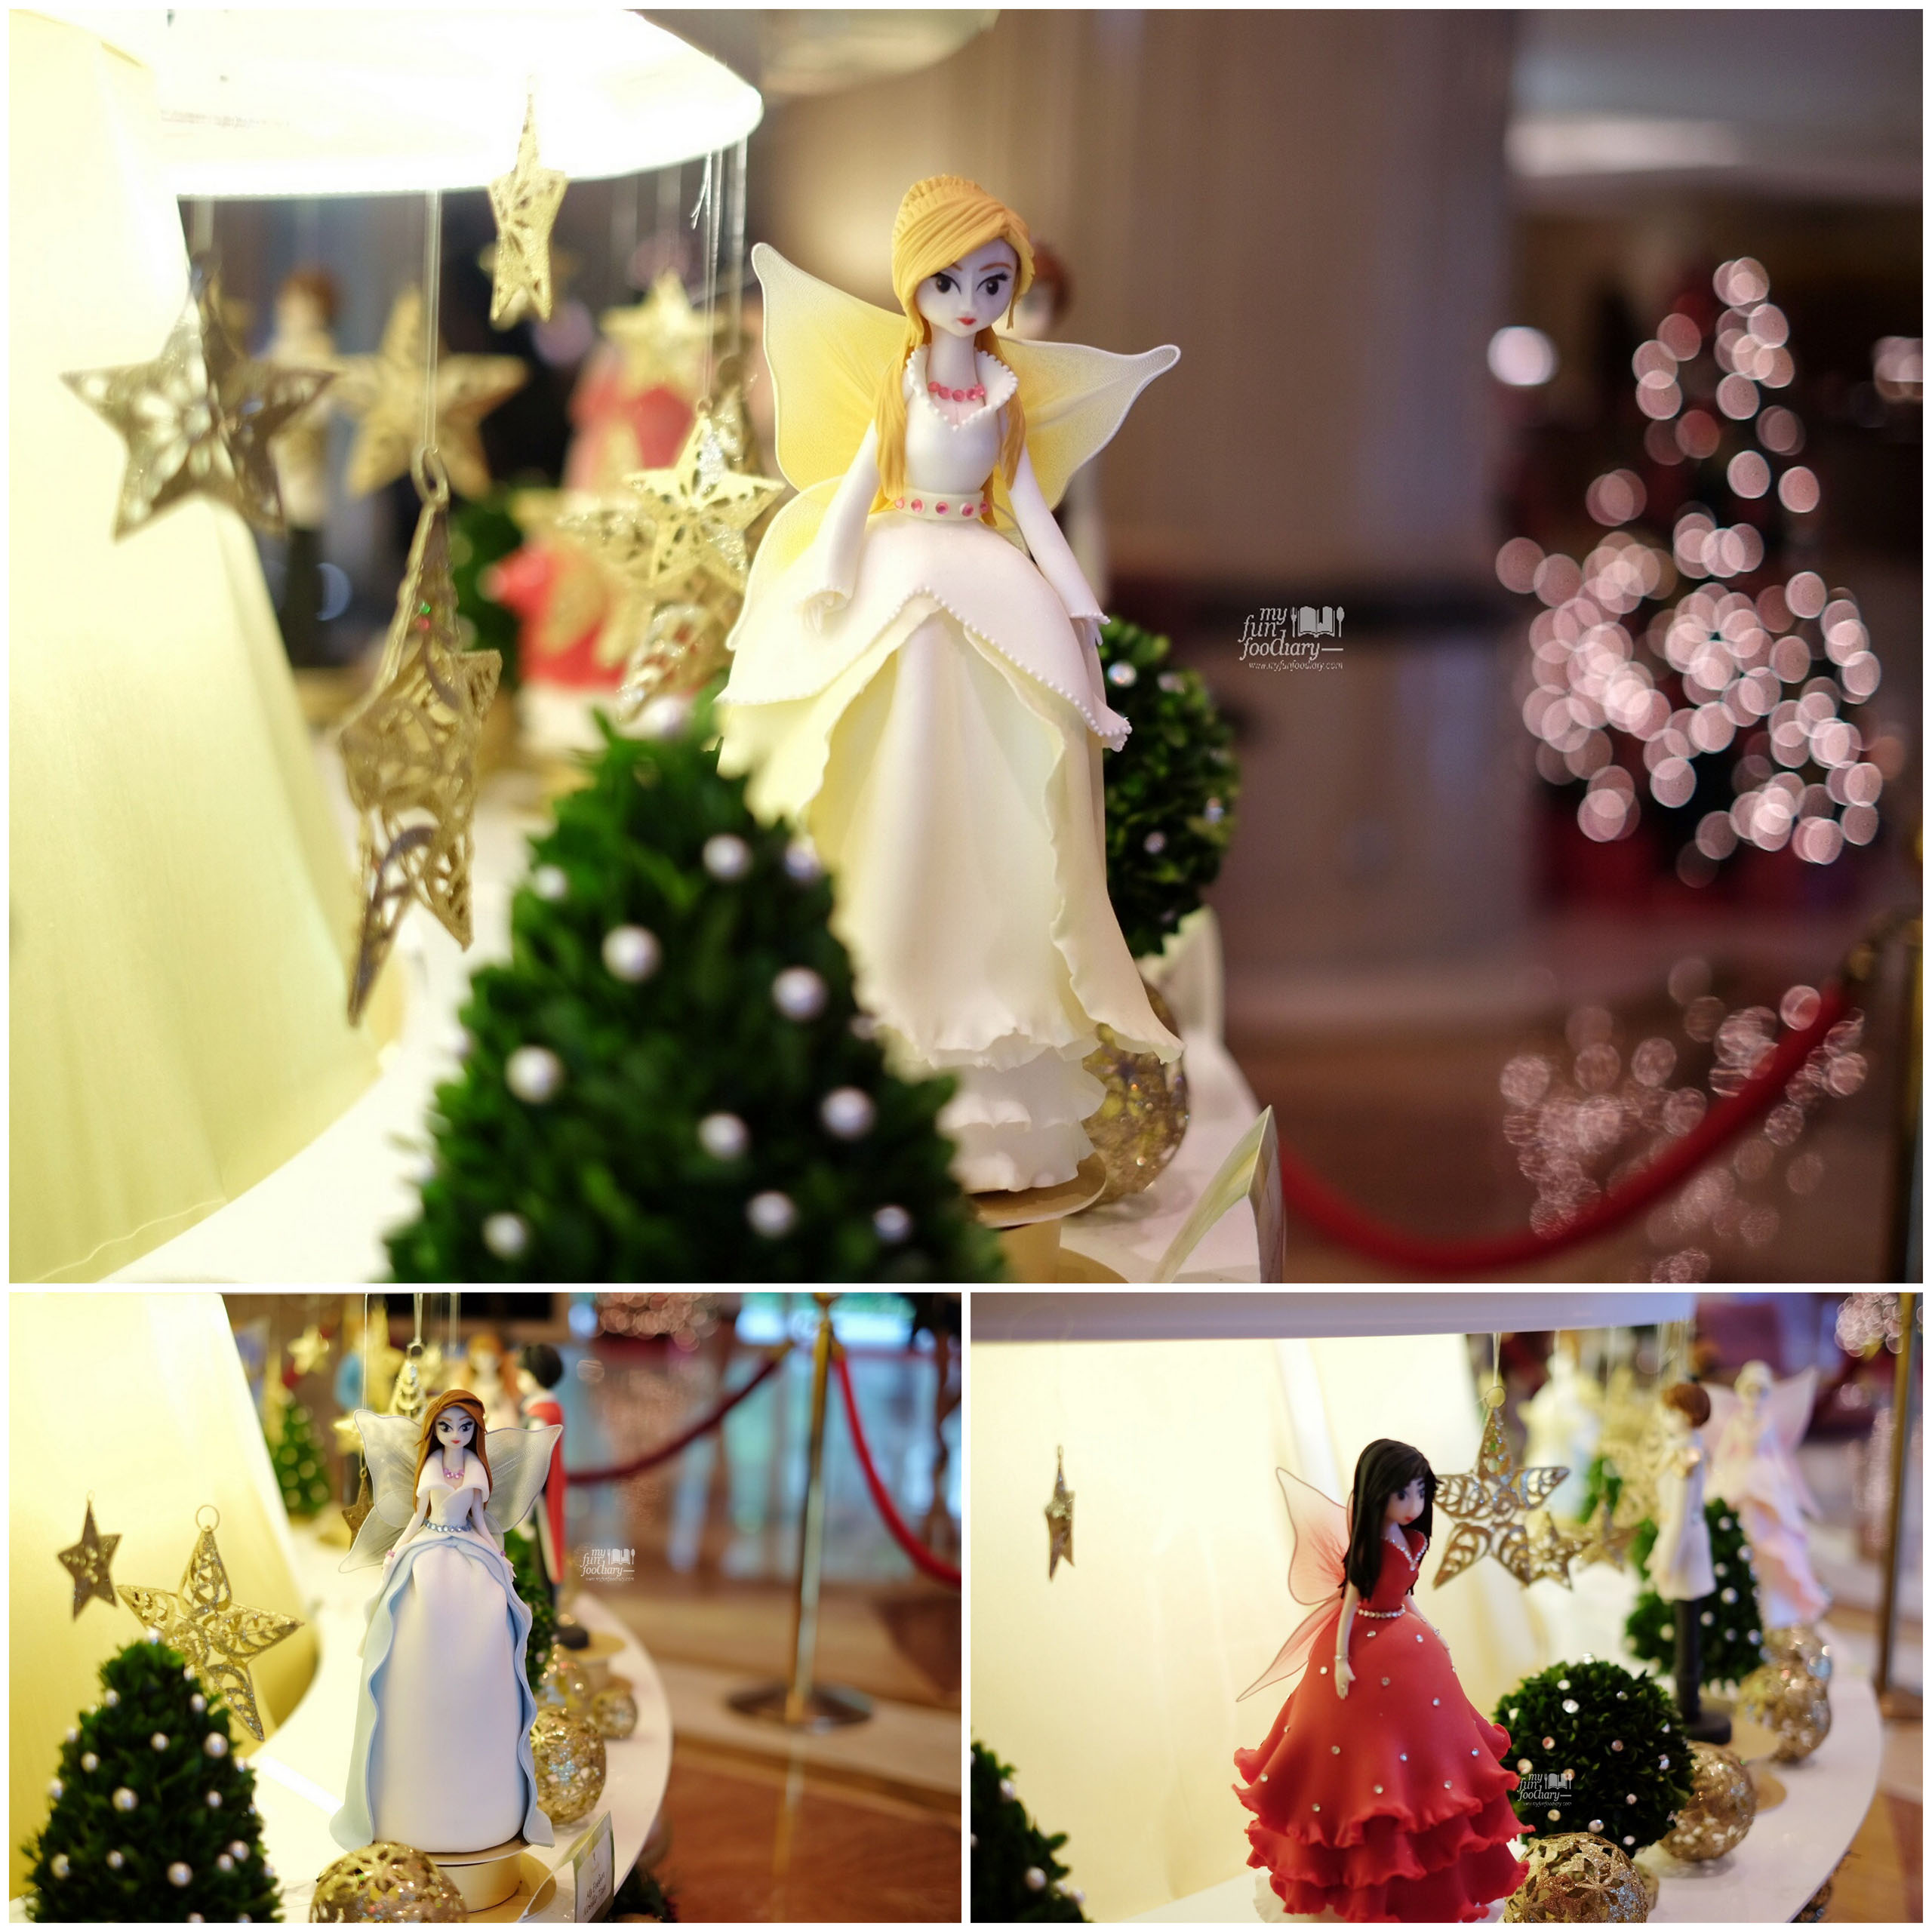 Adorable Princess and Prince - Once Upon A Christmas at Shangri-La Singapore by Myfunfoodiary